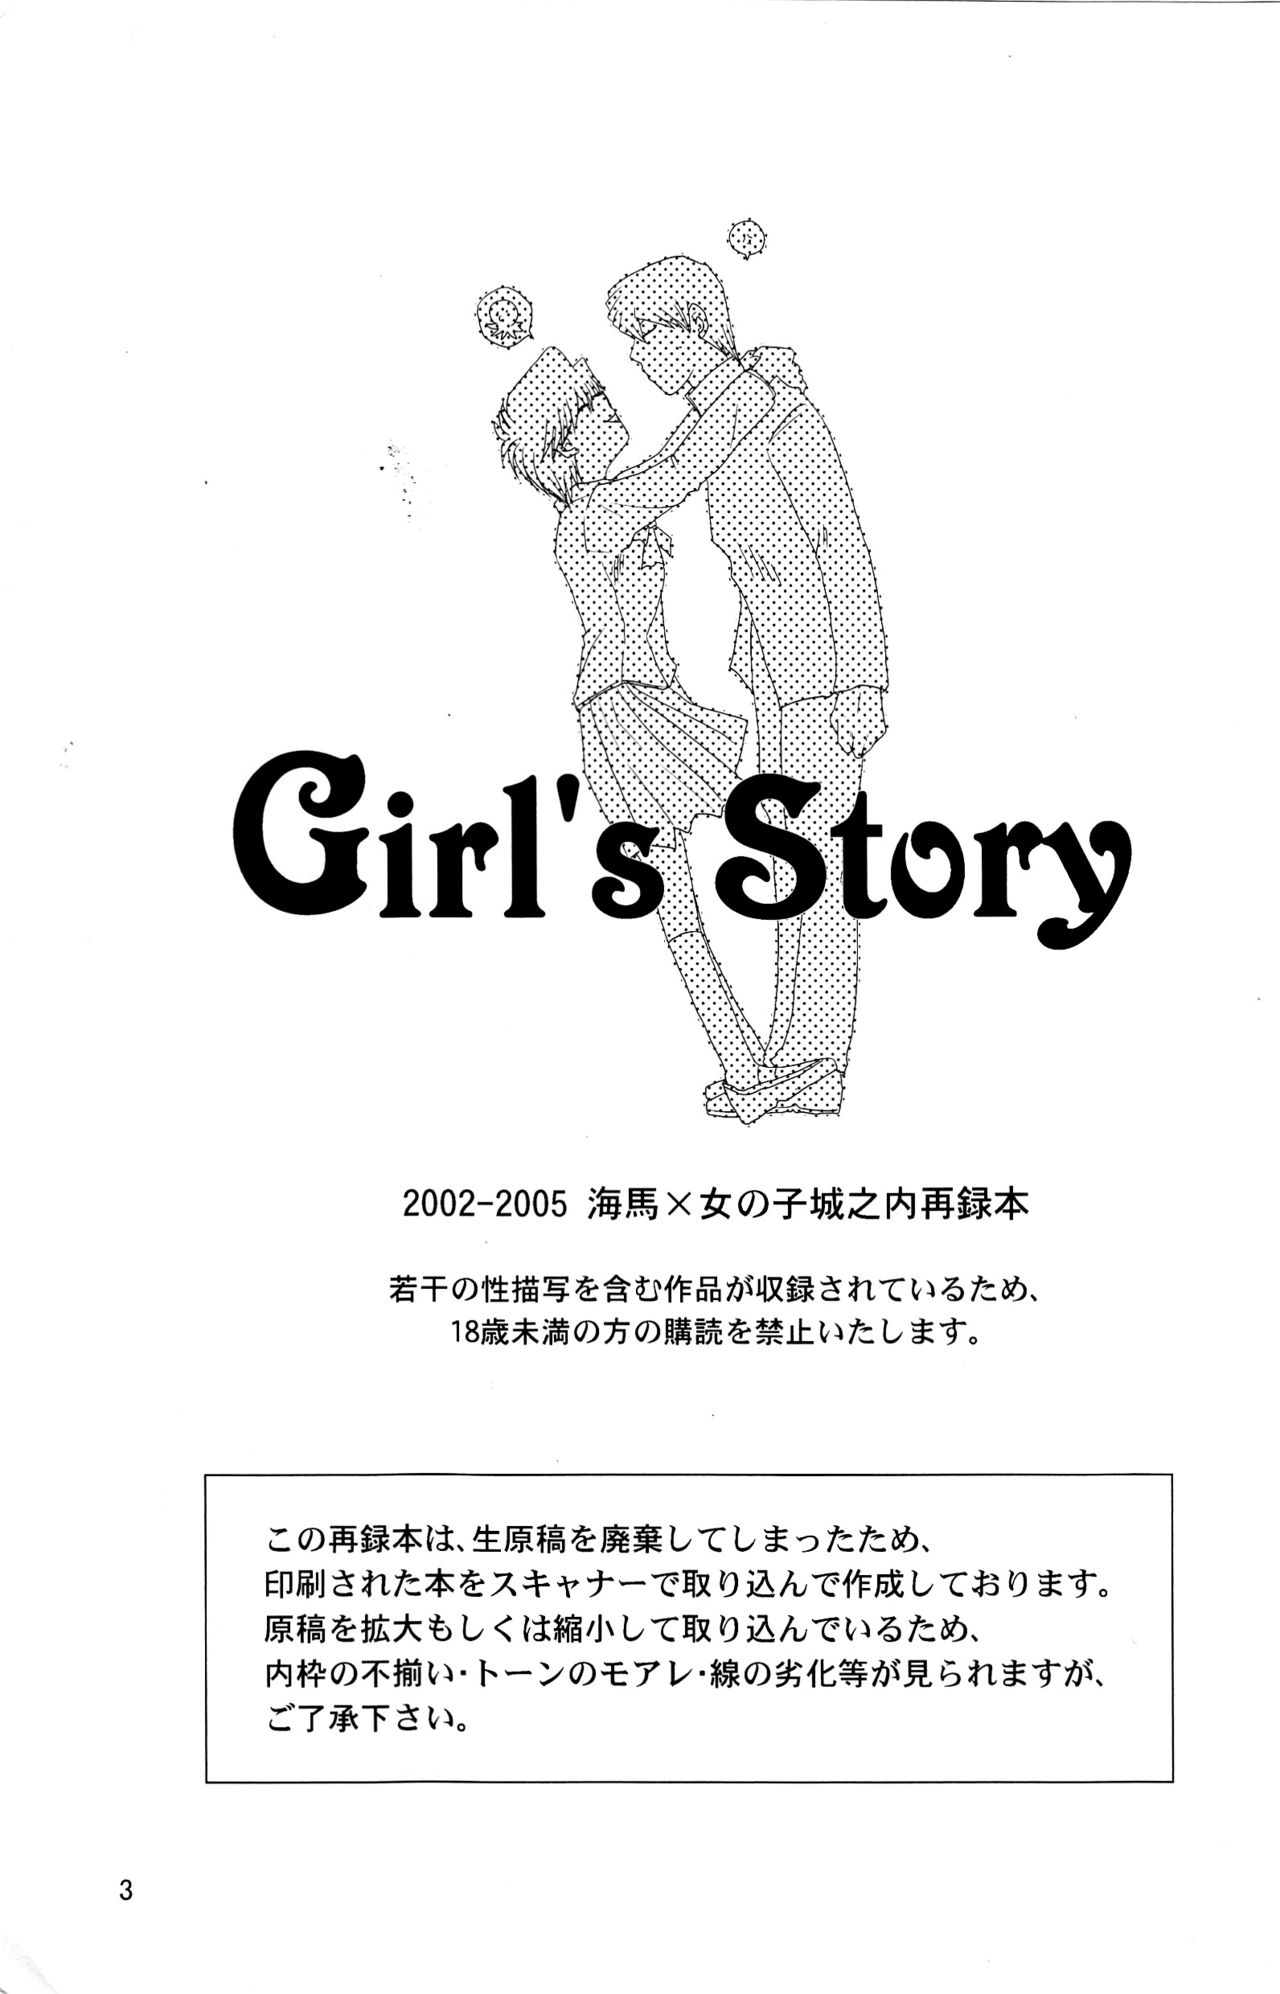 [Idolwild kagami] Girl's story [yu-gi-oh]chapter 1 english fated cirlce 